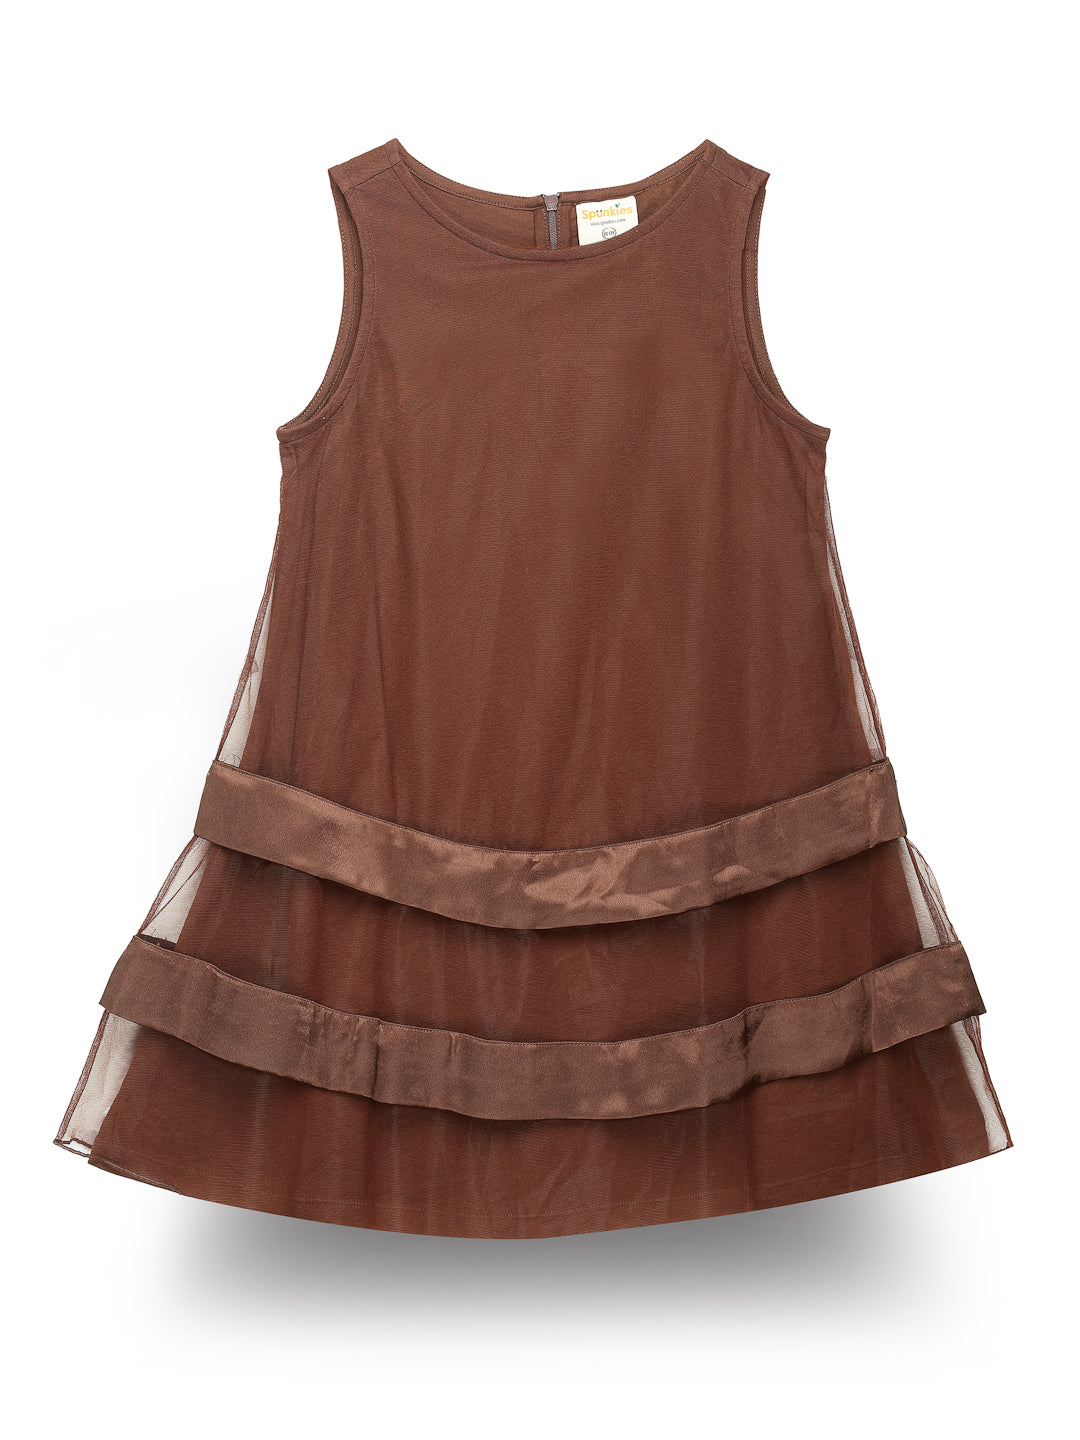 Modish brown sleeveless Satin dress